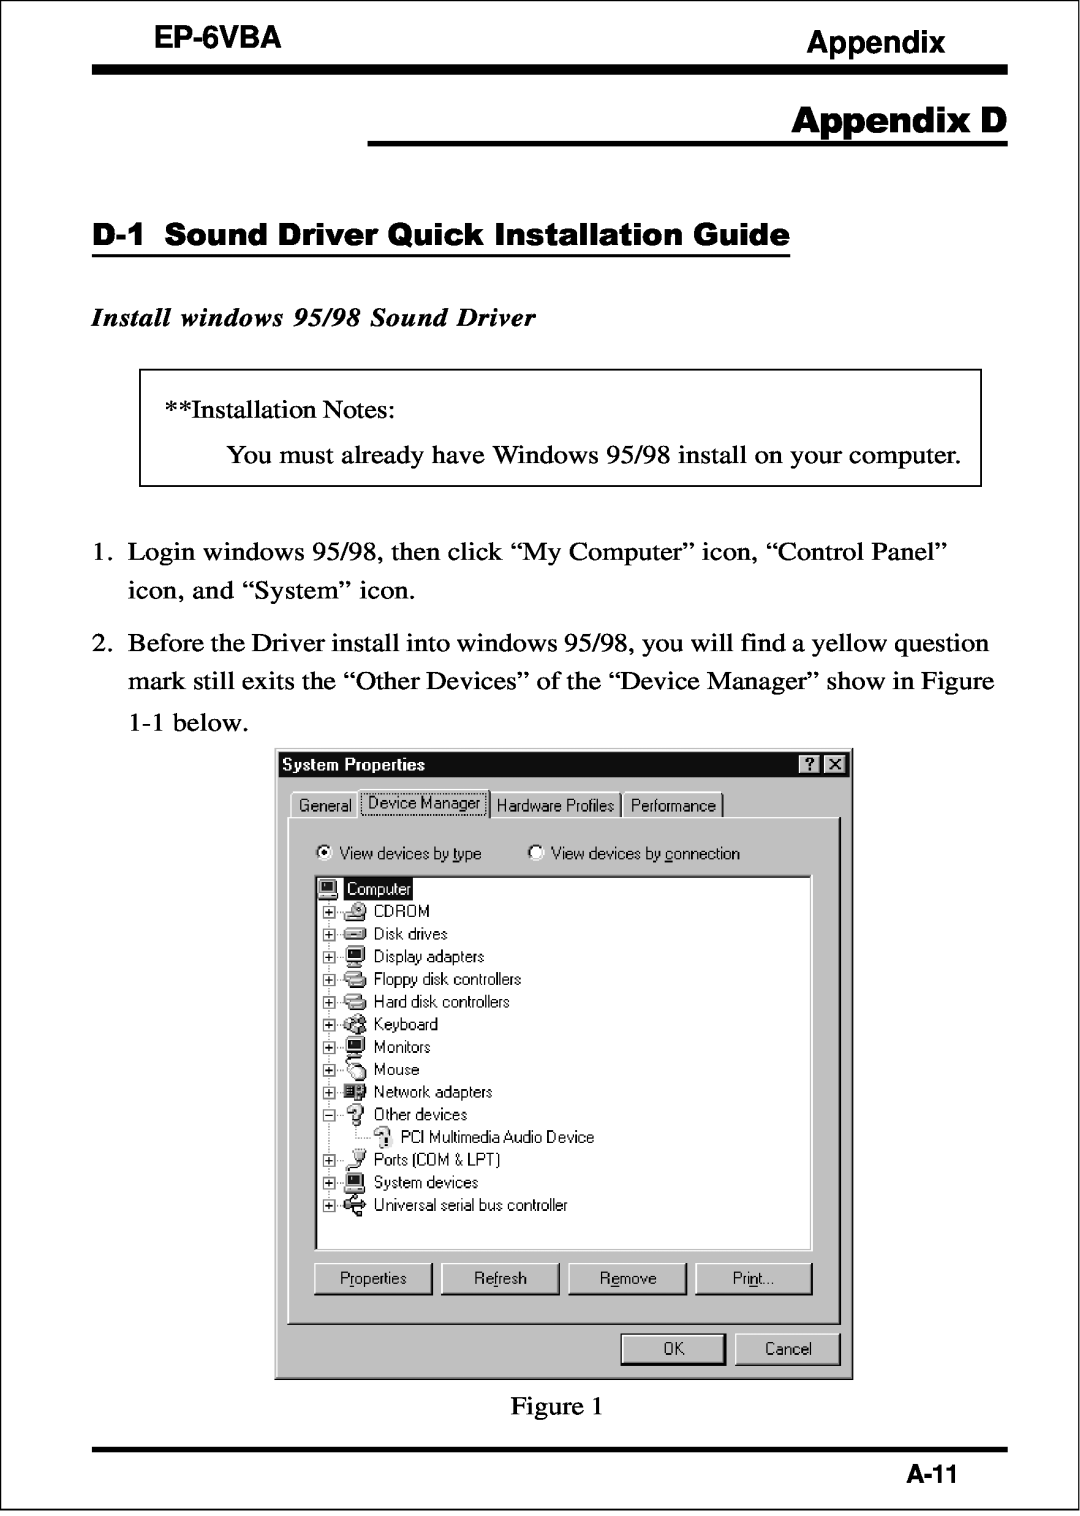 EPoX Computer EP-6VBA Appendix D, D-1 Sound Driver Quick Installation Guide, Install windows 95/98 Sound Driver, A-11 